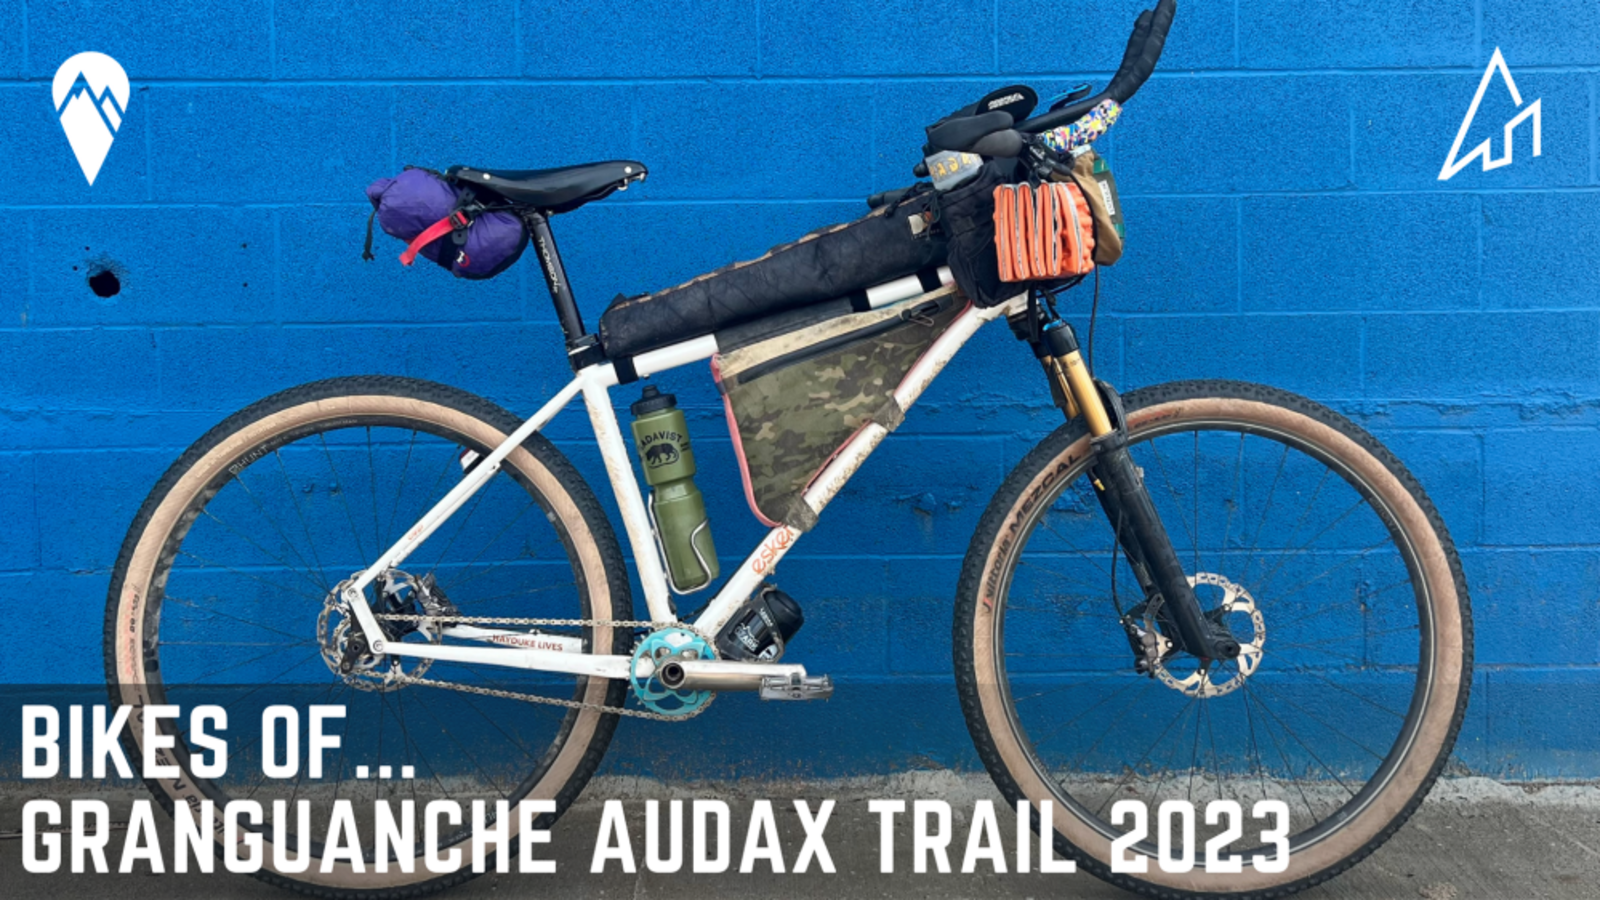 Bikes Of... GranGuanche Audax Trail 2023